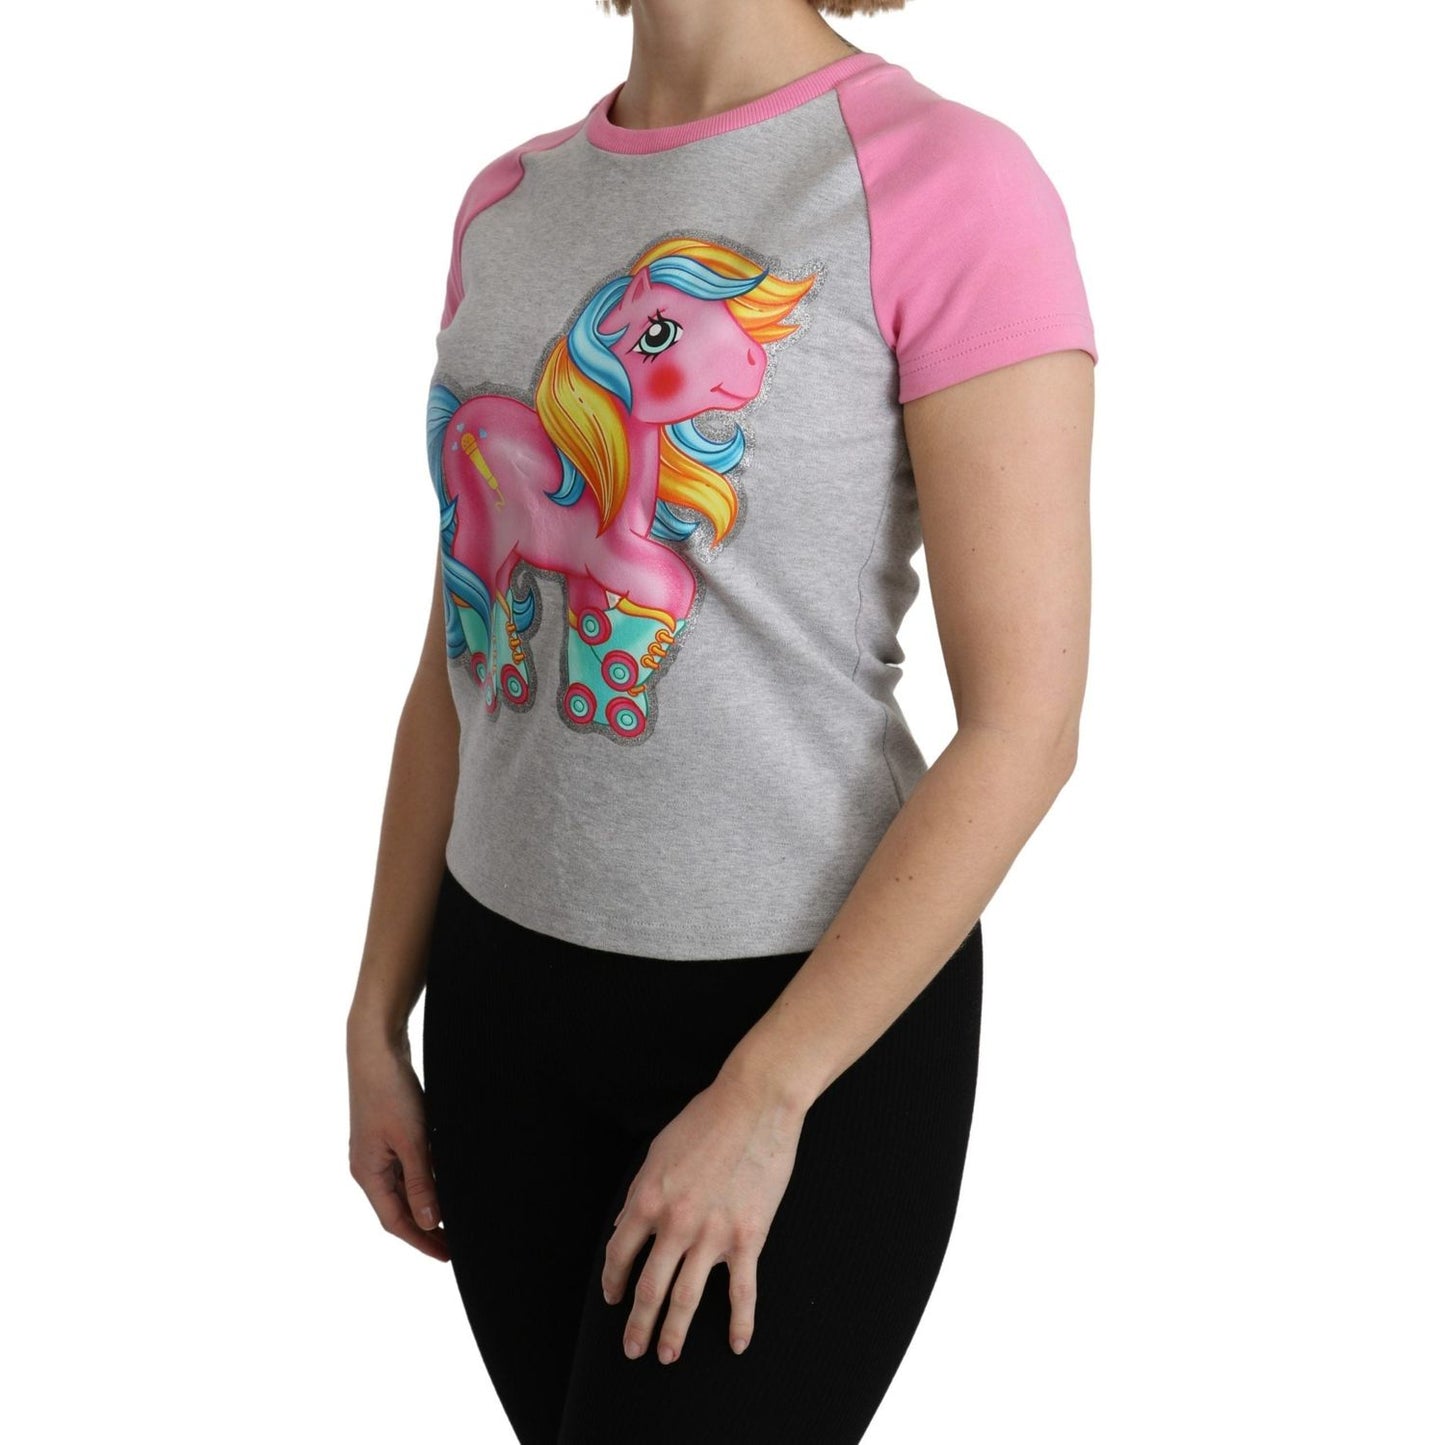 Moschino Chic Gray Crew Neck Cotton T-shirt with Pink Accents gray-and-pink-cotton-t-shirt-my-little-pony-top